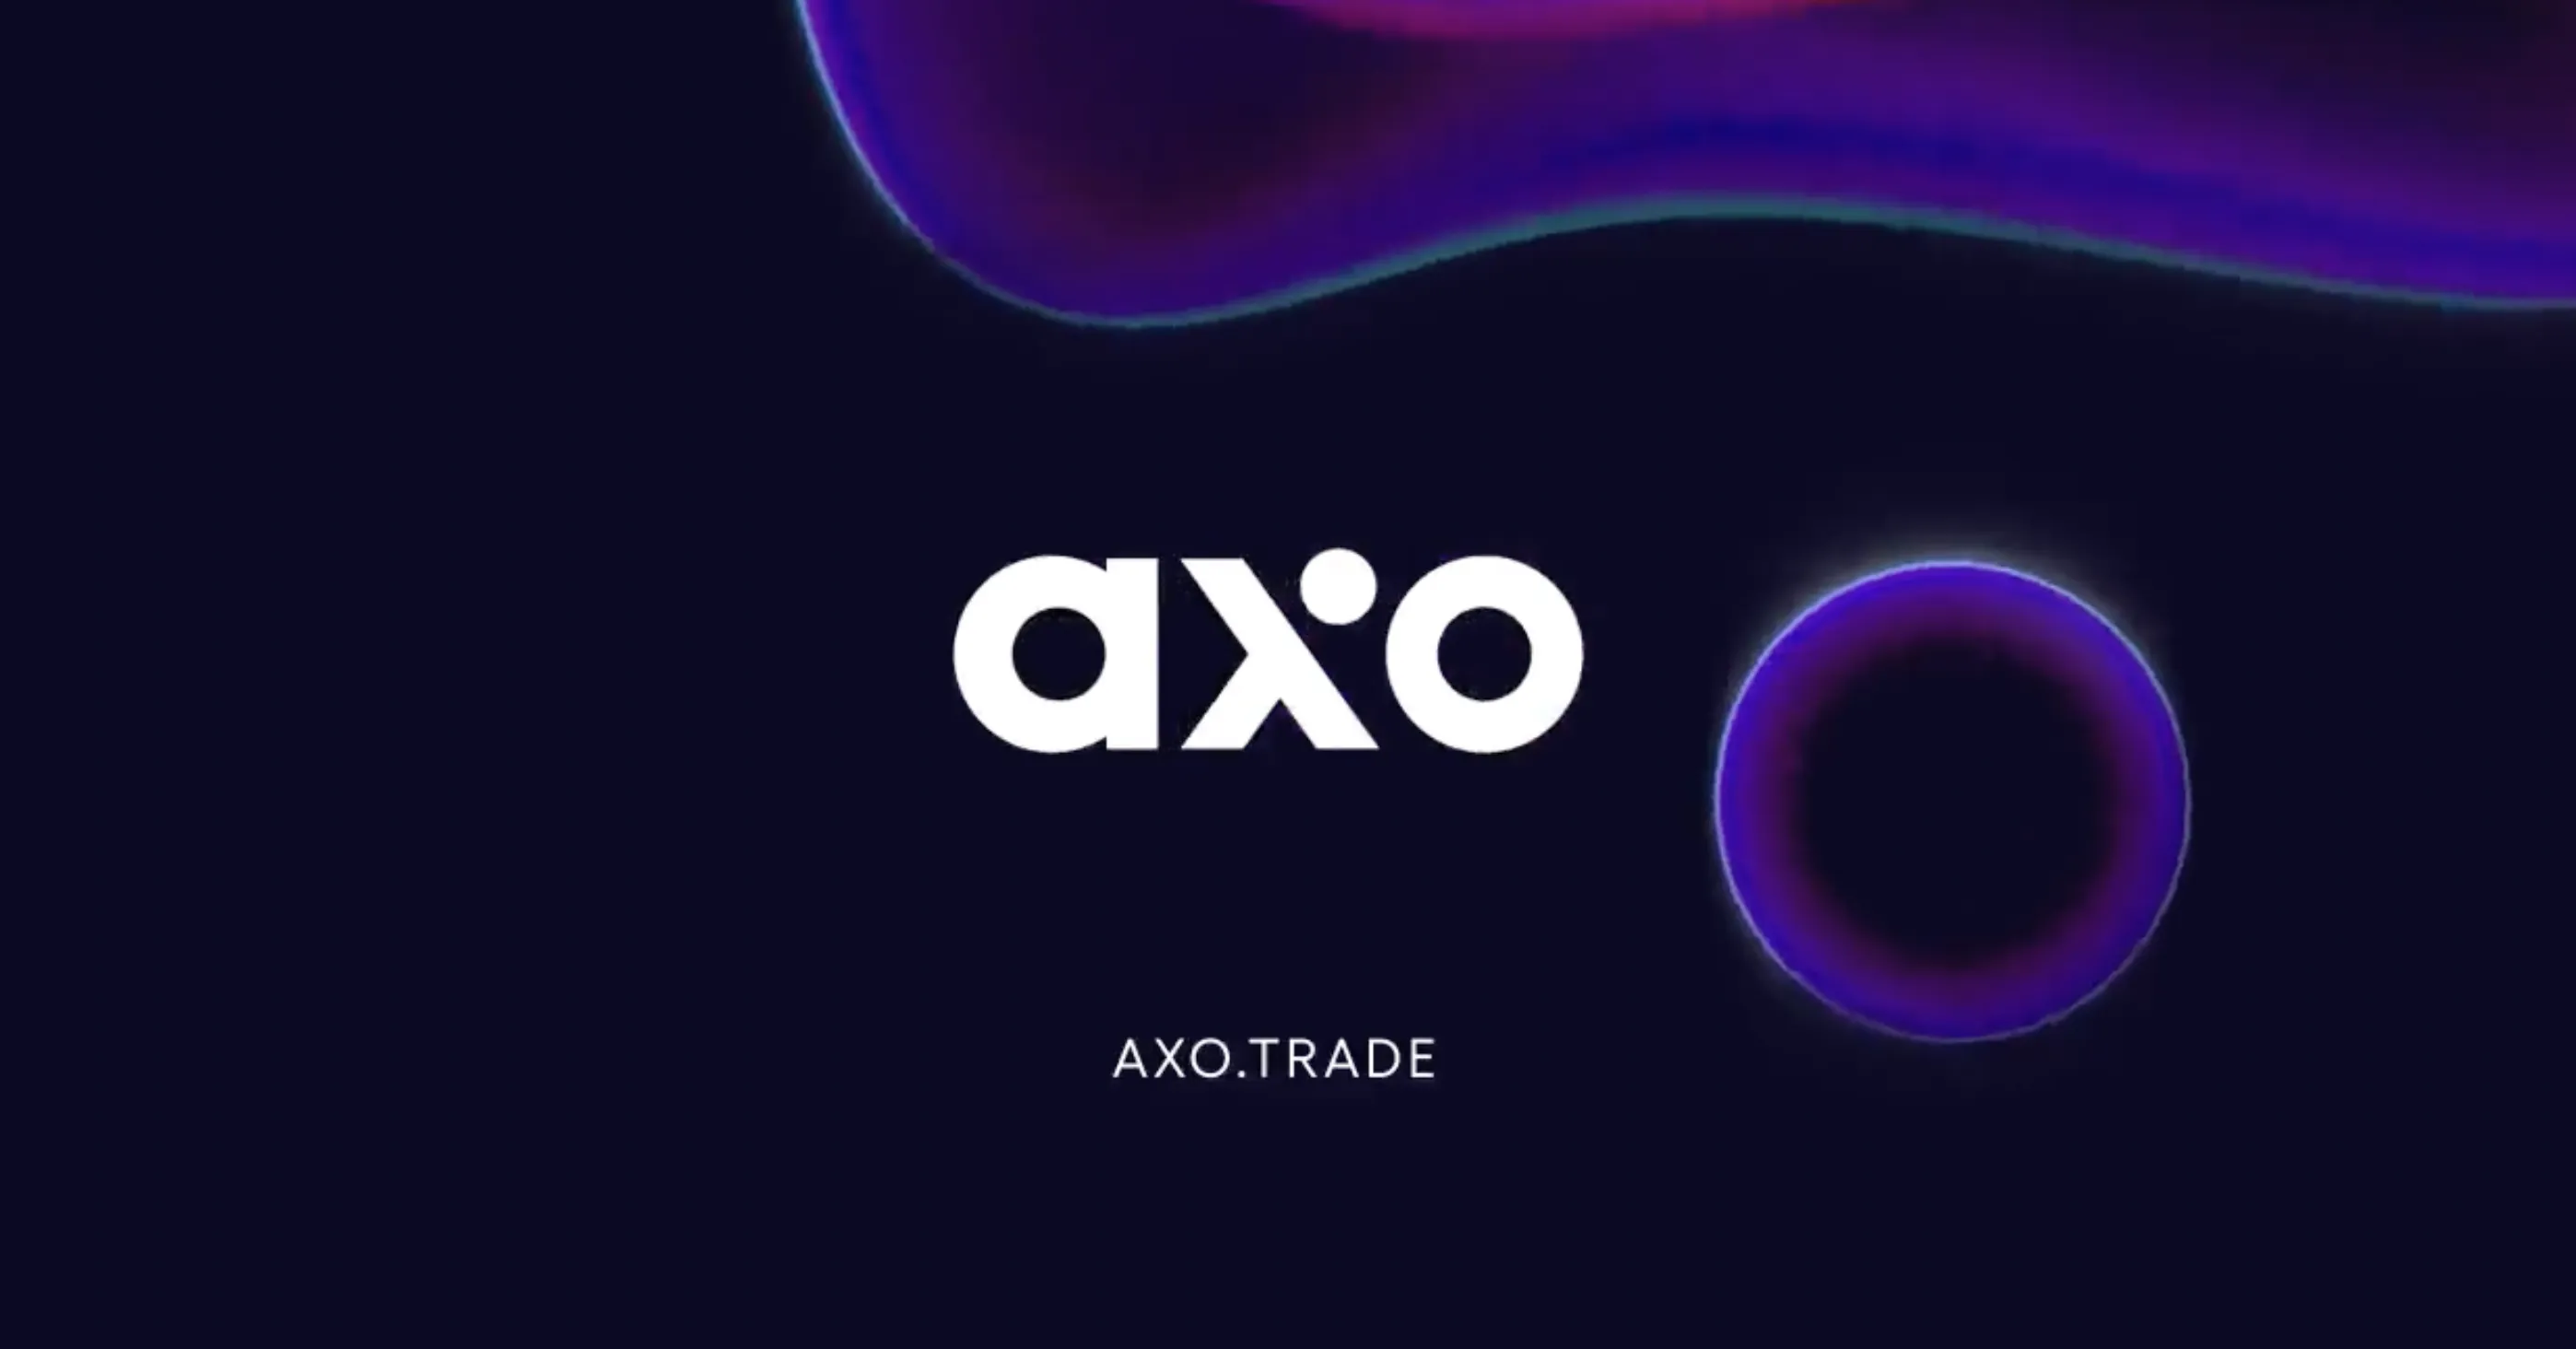 Maladex rebrand to Axo